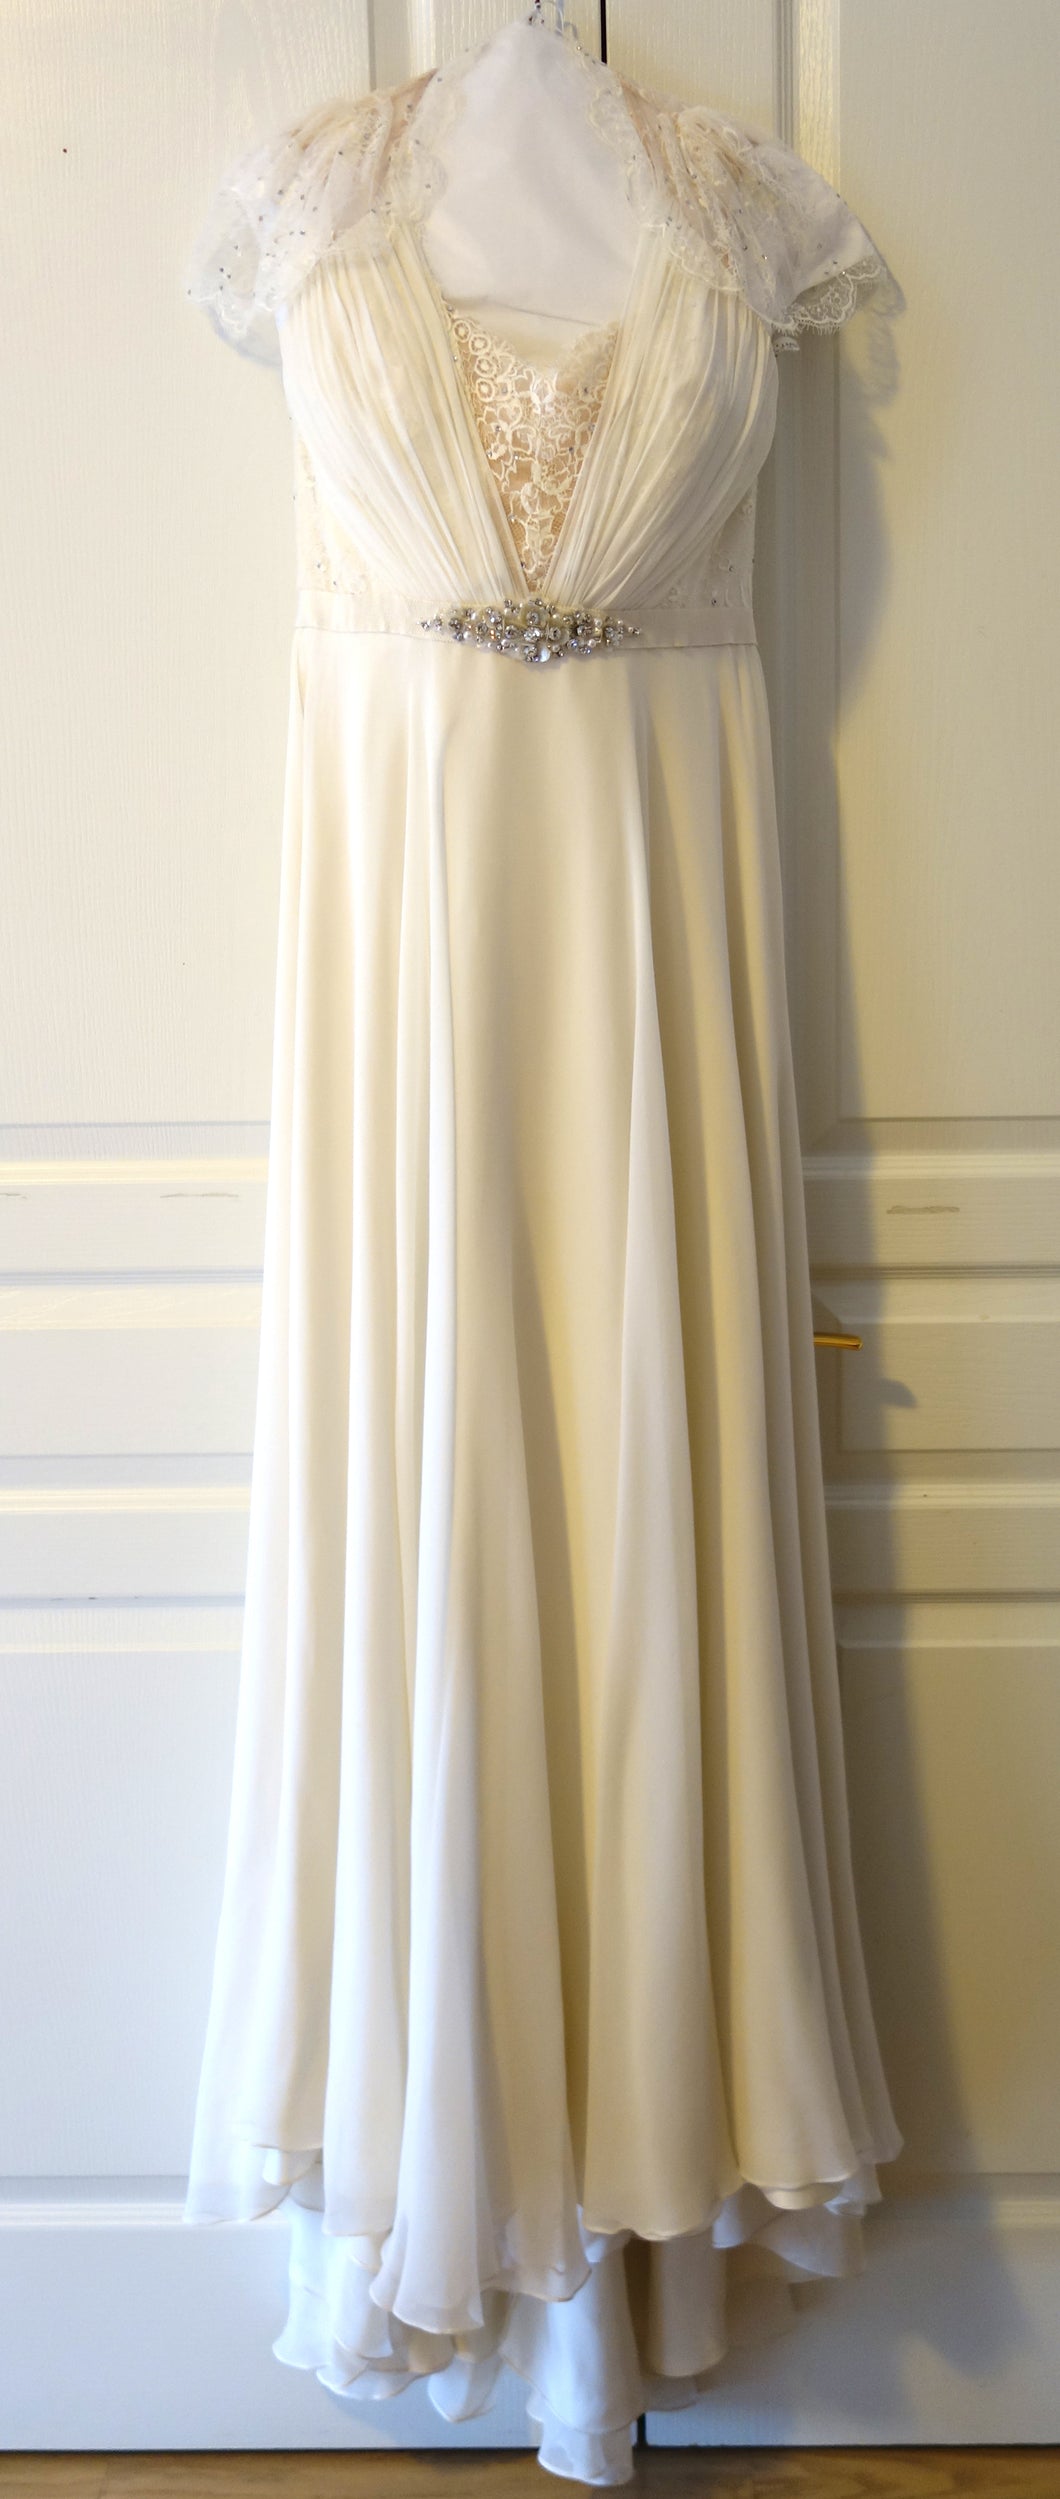 Jenny Packham 'Aspen' size 10 used wedding dress front view on hanger